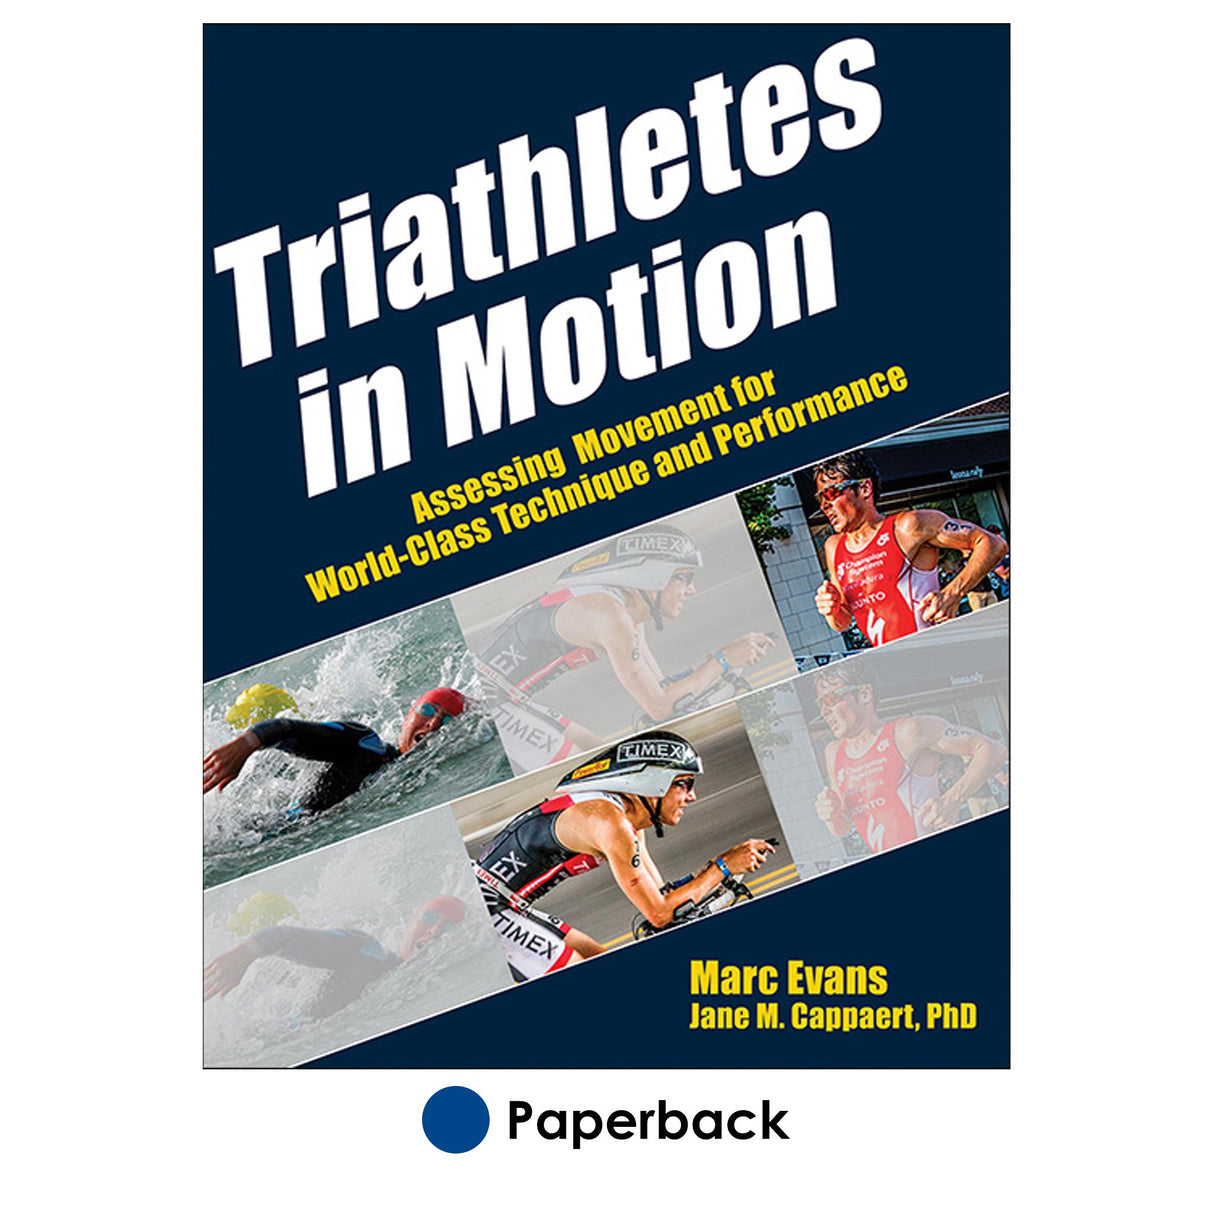 Triathletes in Motion